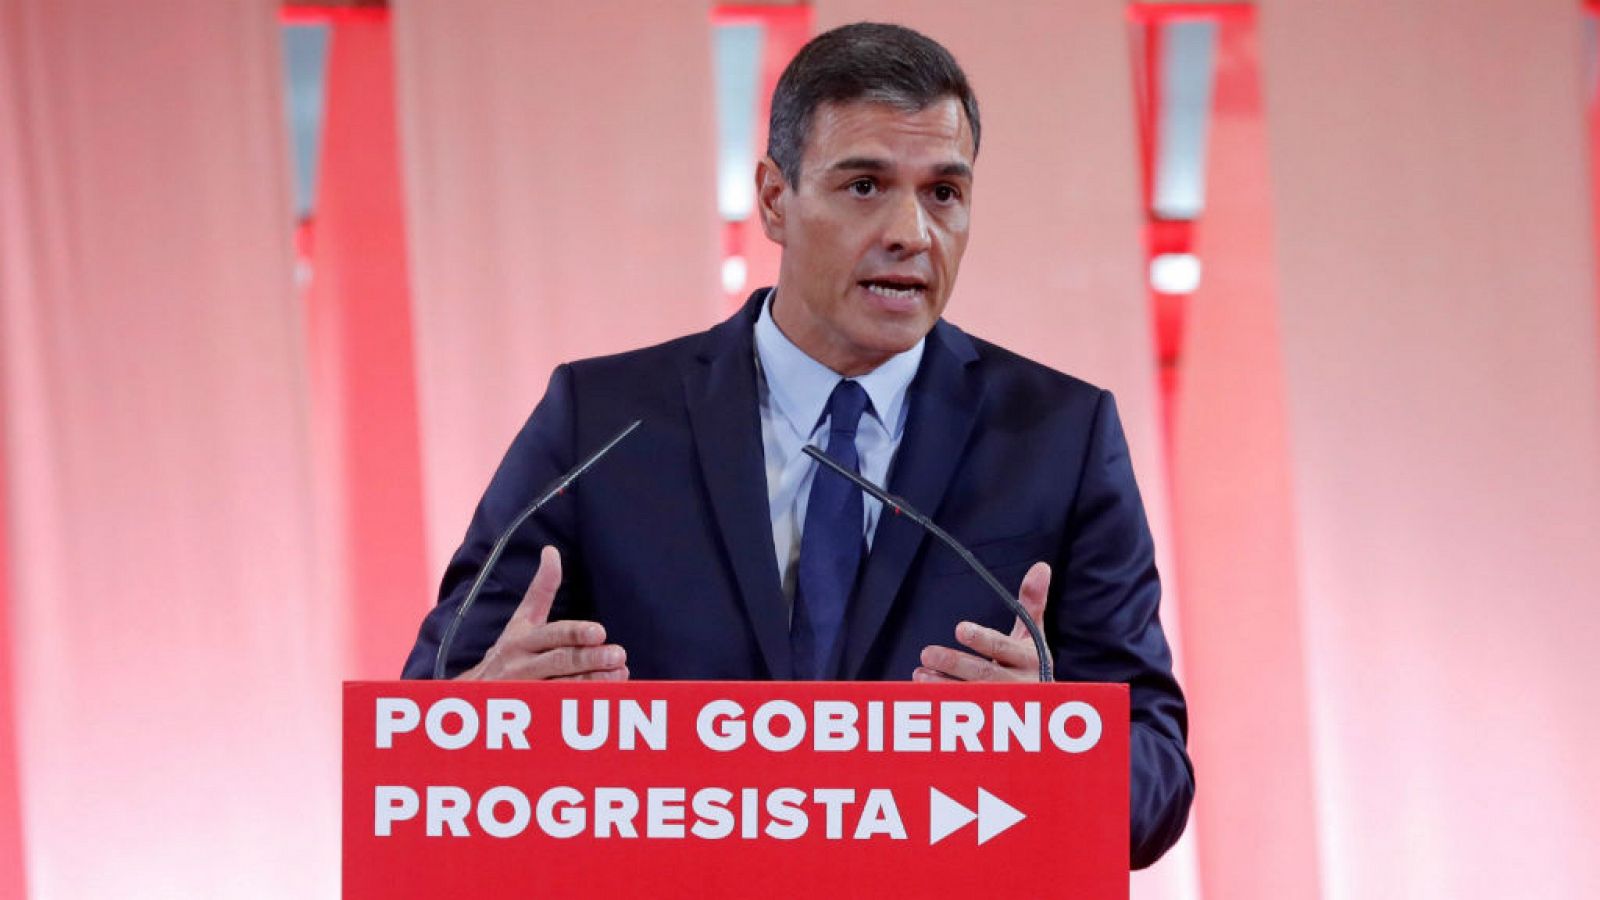  14 horas - Pedro Sánchez ve en coalición "un camino que no conduce a nada" - escuchar ahora